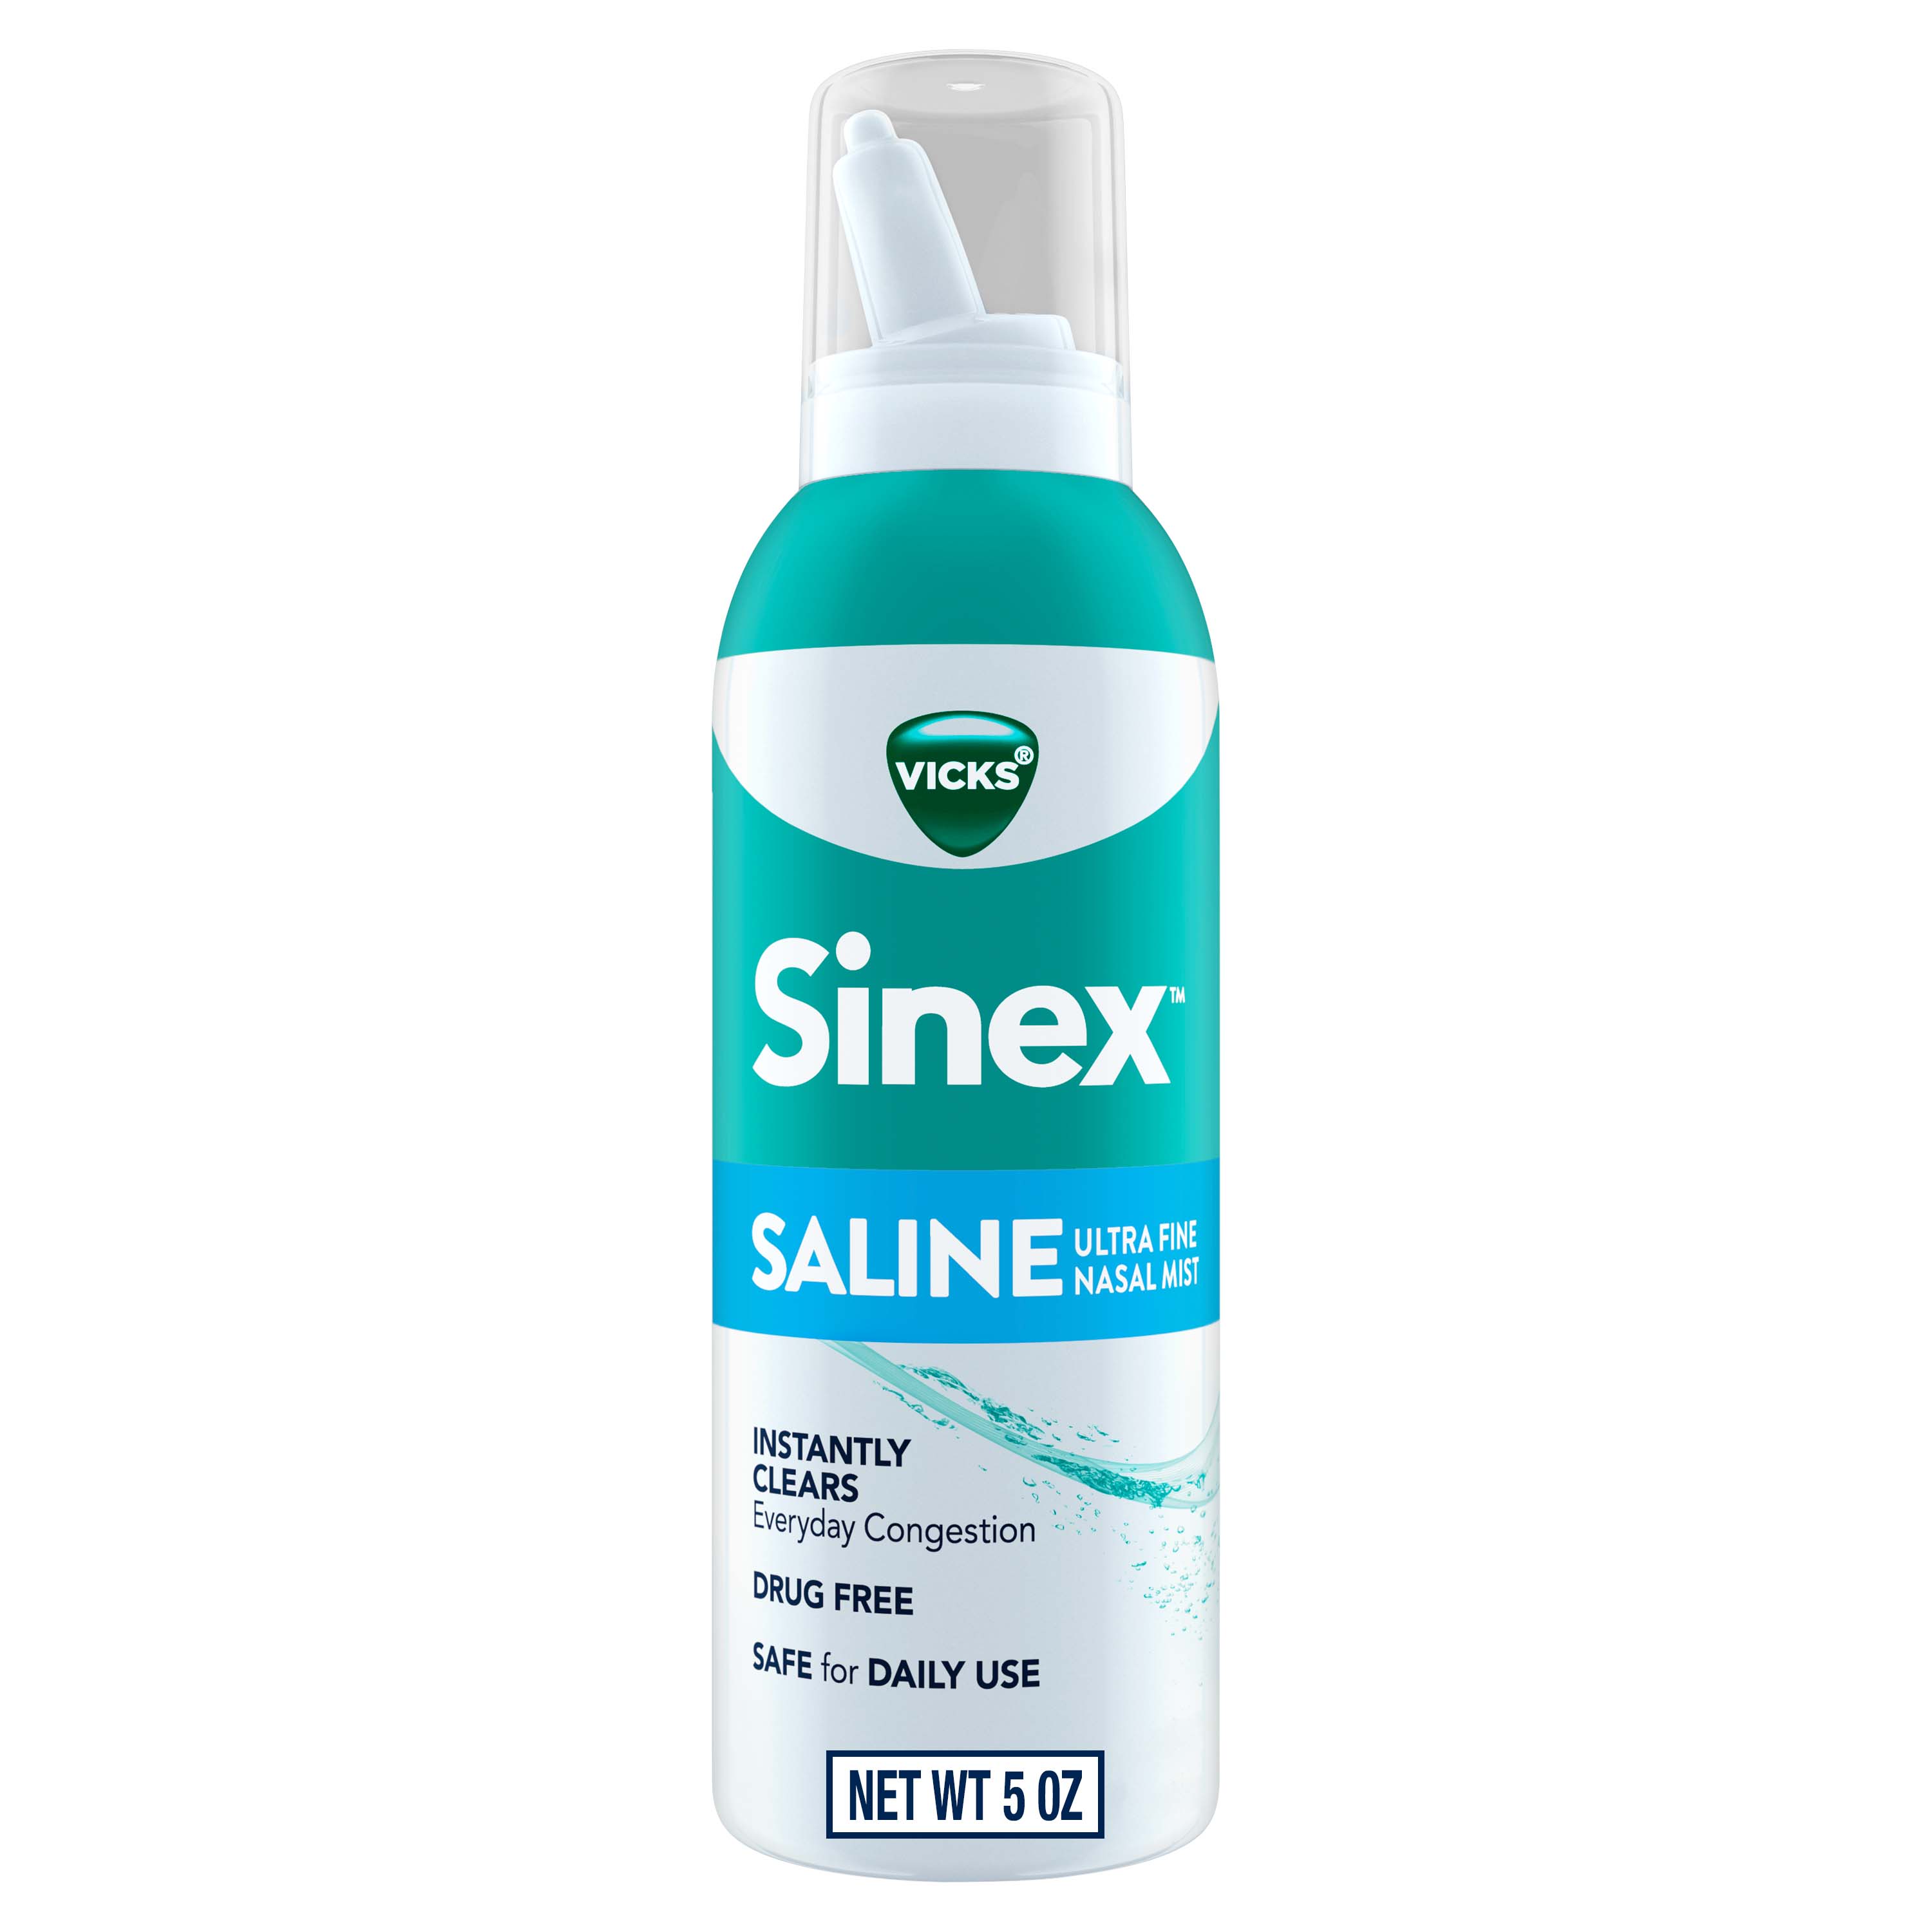 Vicks Sinex Saline Ultra Fine Nasal Mist Spray for Sinus Relief, Drug Free, 5 oz Unisex - image 1 of 11